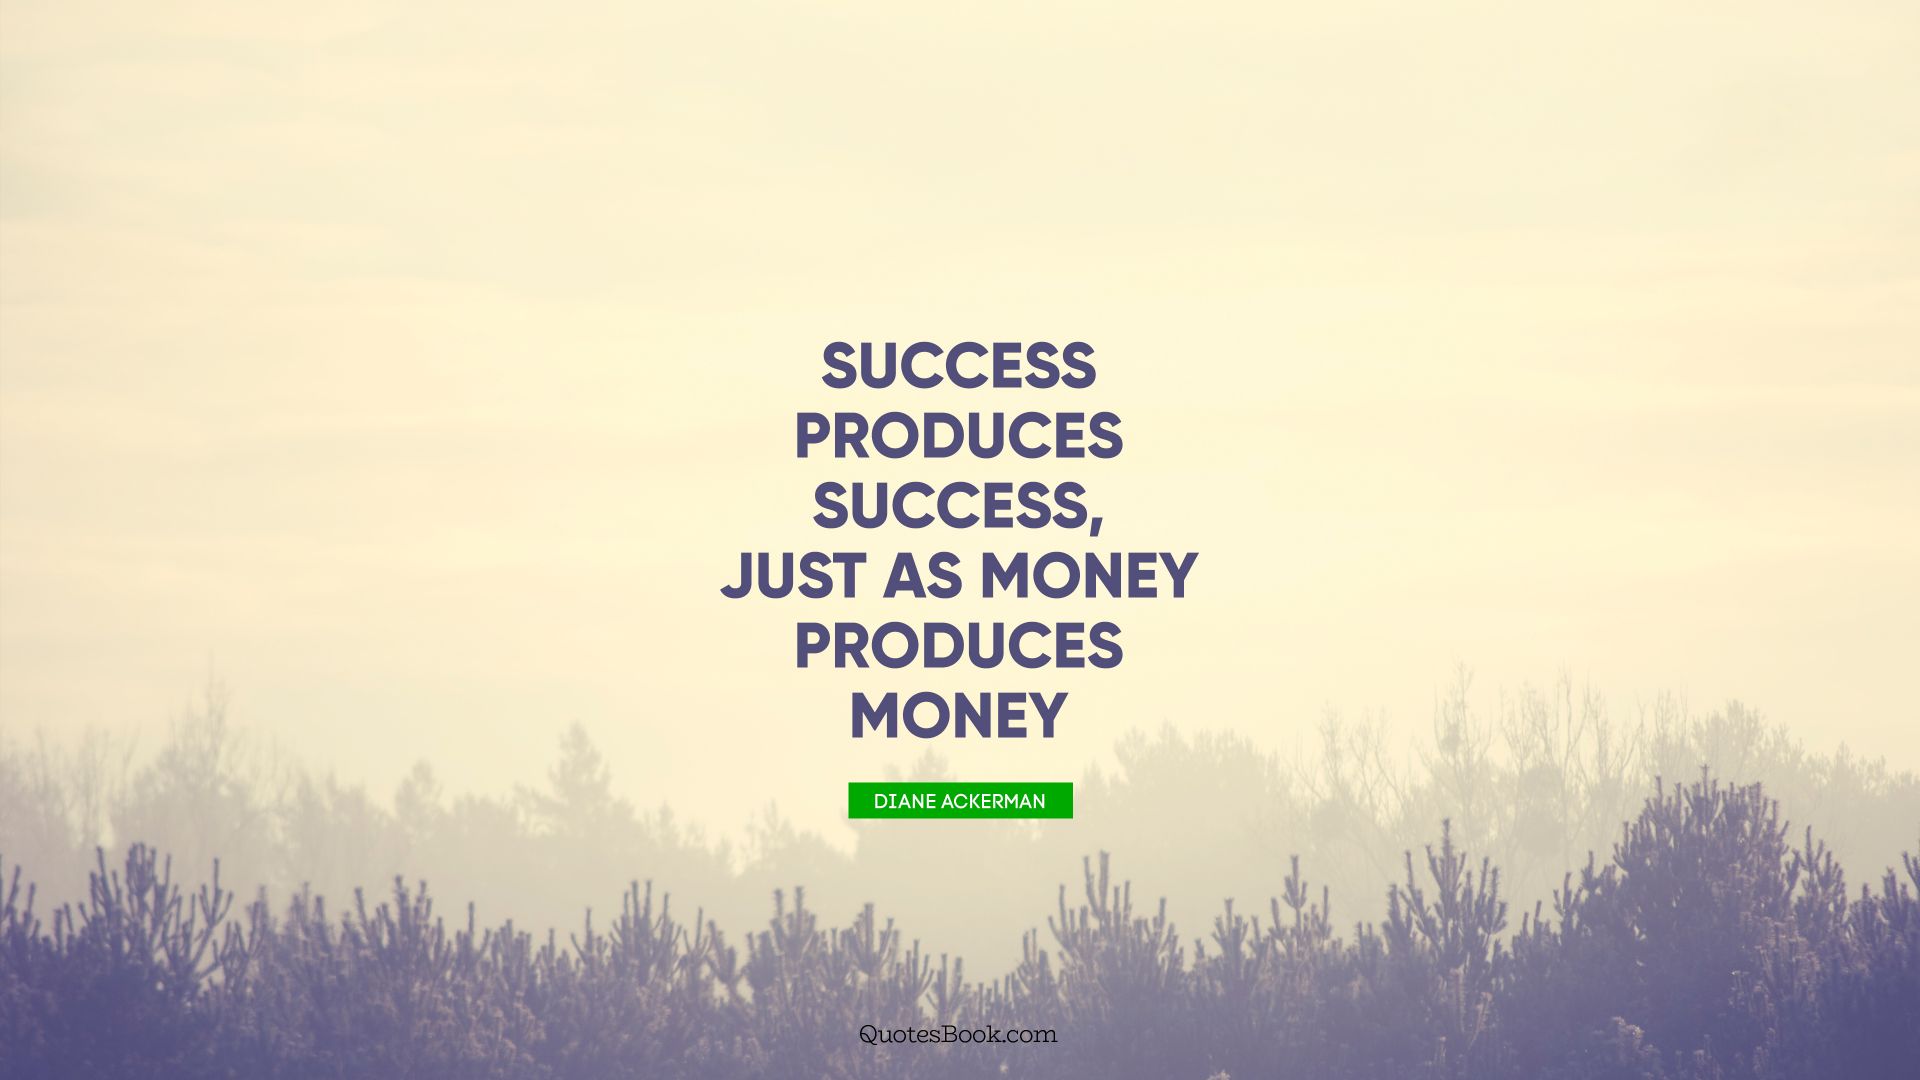 Success produces success, just as money produces money. - Quote by Diane Ackerman